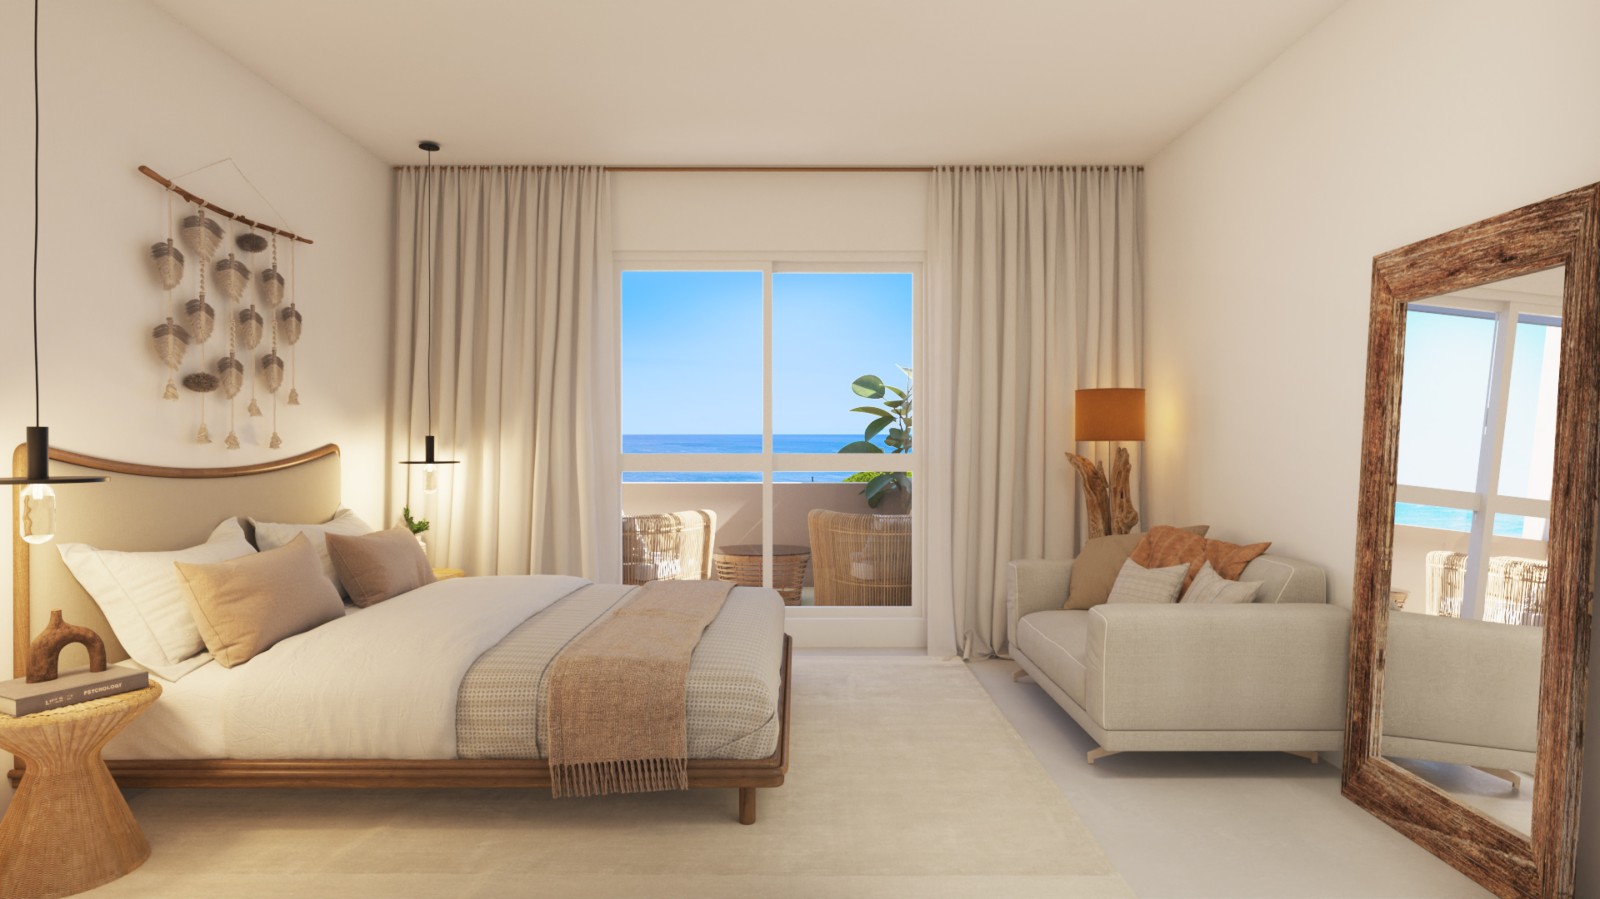 2 bedroom Villa in resort, for sale in Olhos de Água, Algarve_227971